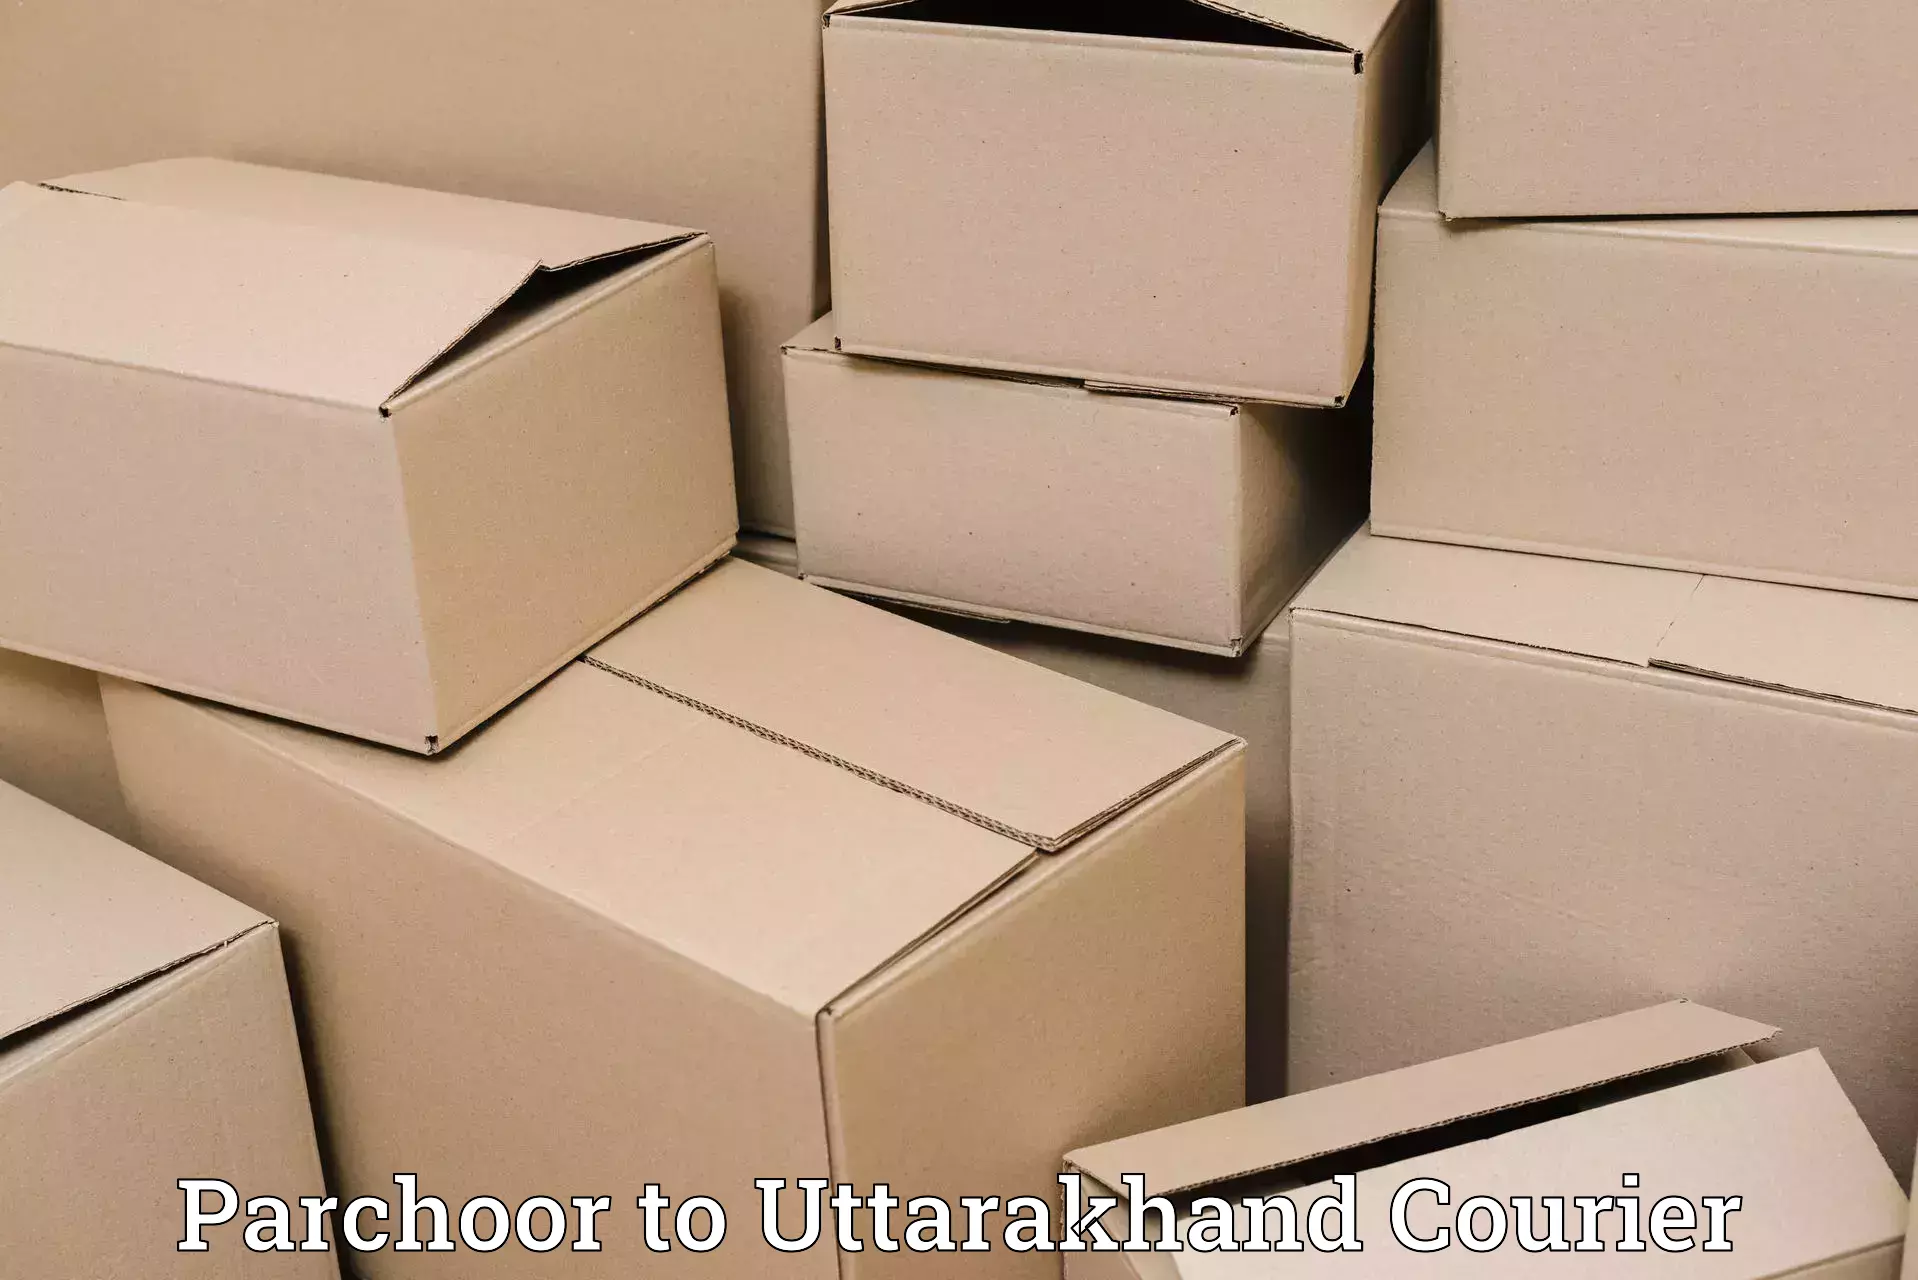 Efficient shipping operations Parchoor to Karnaprayag